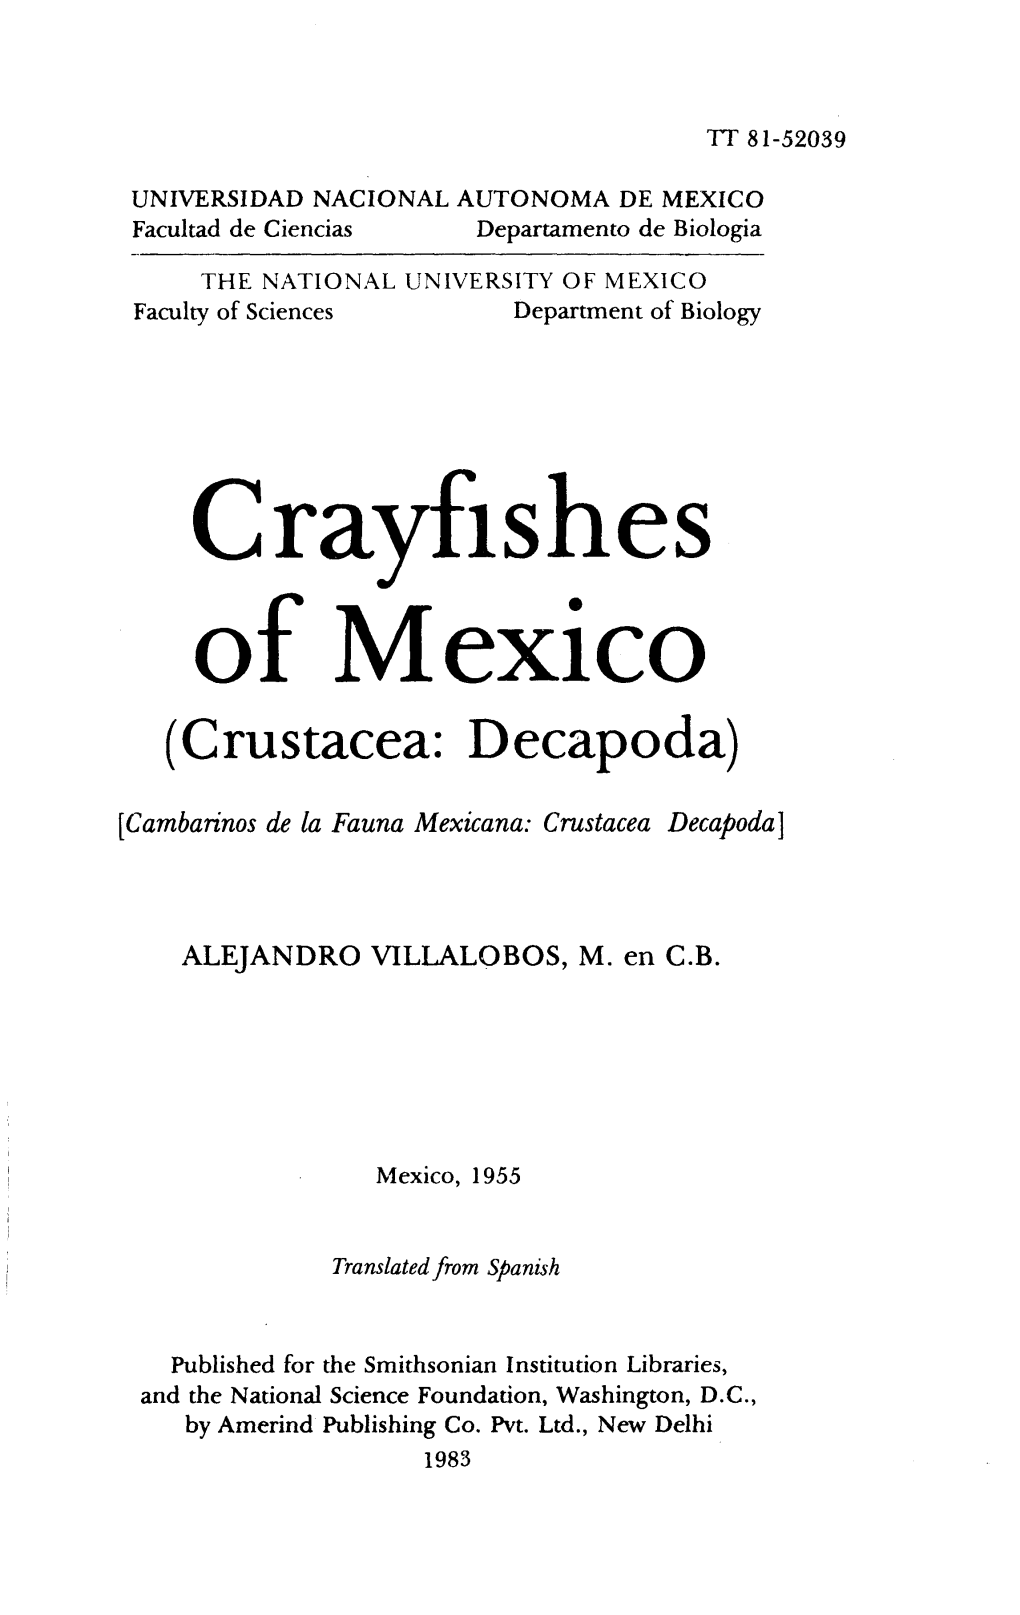 Crayfishes of Mexico (Crustacea: Decapoda)